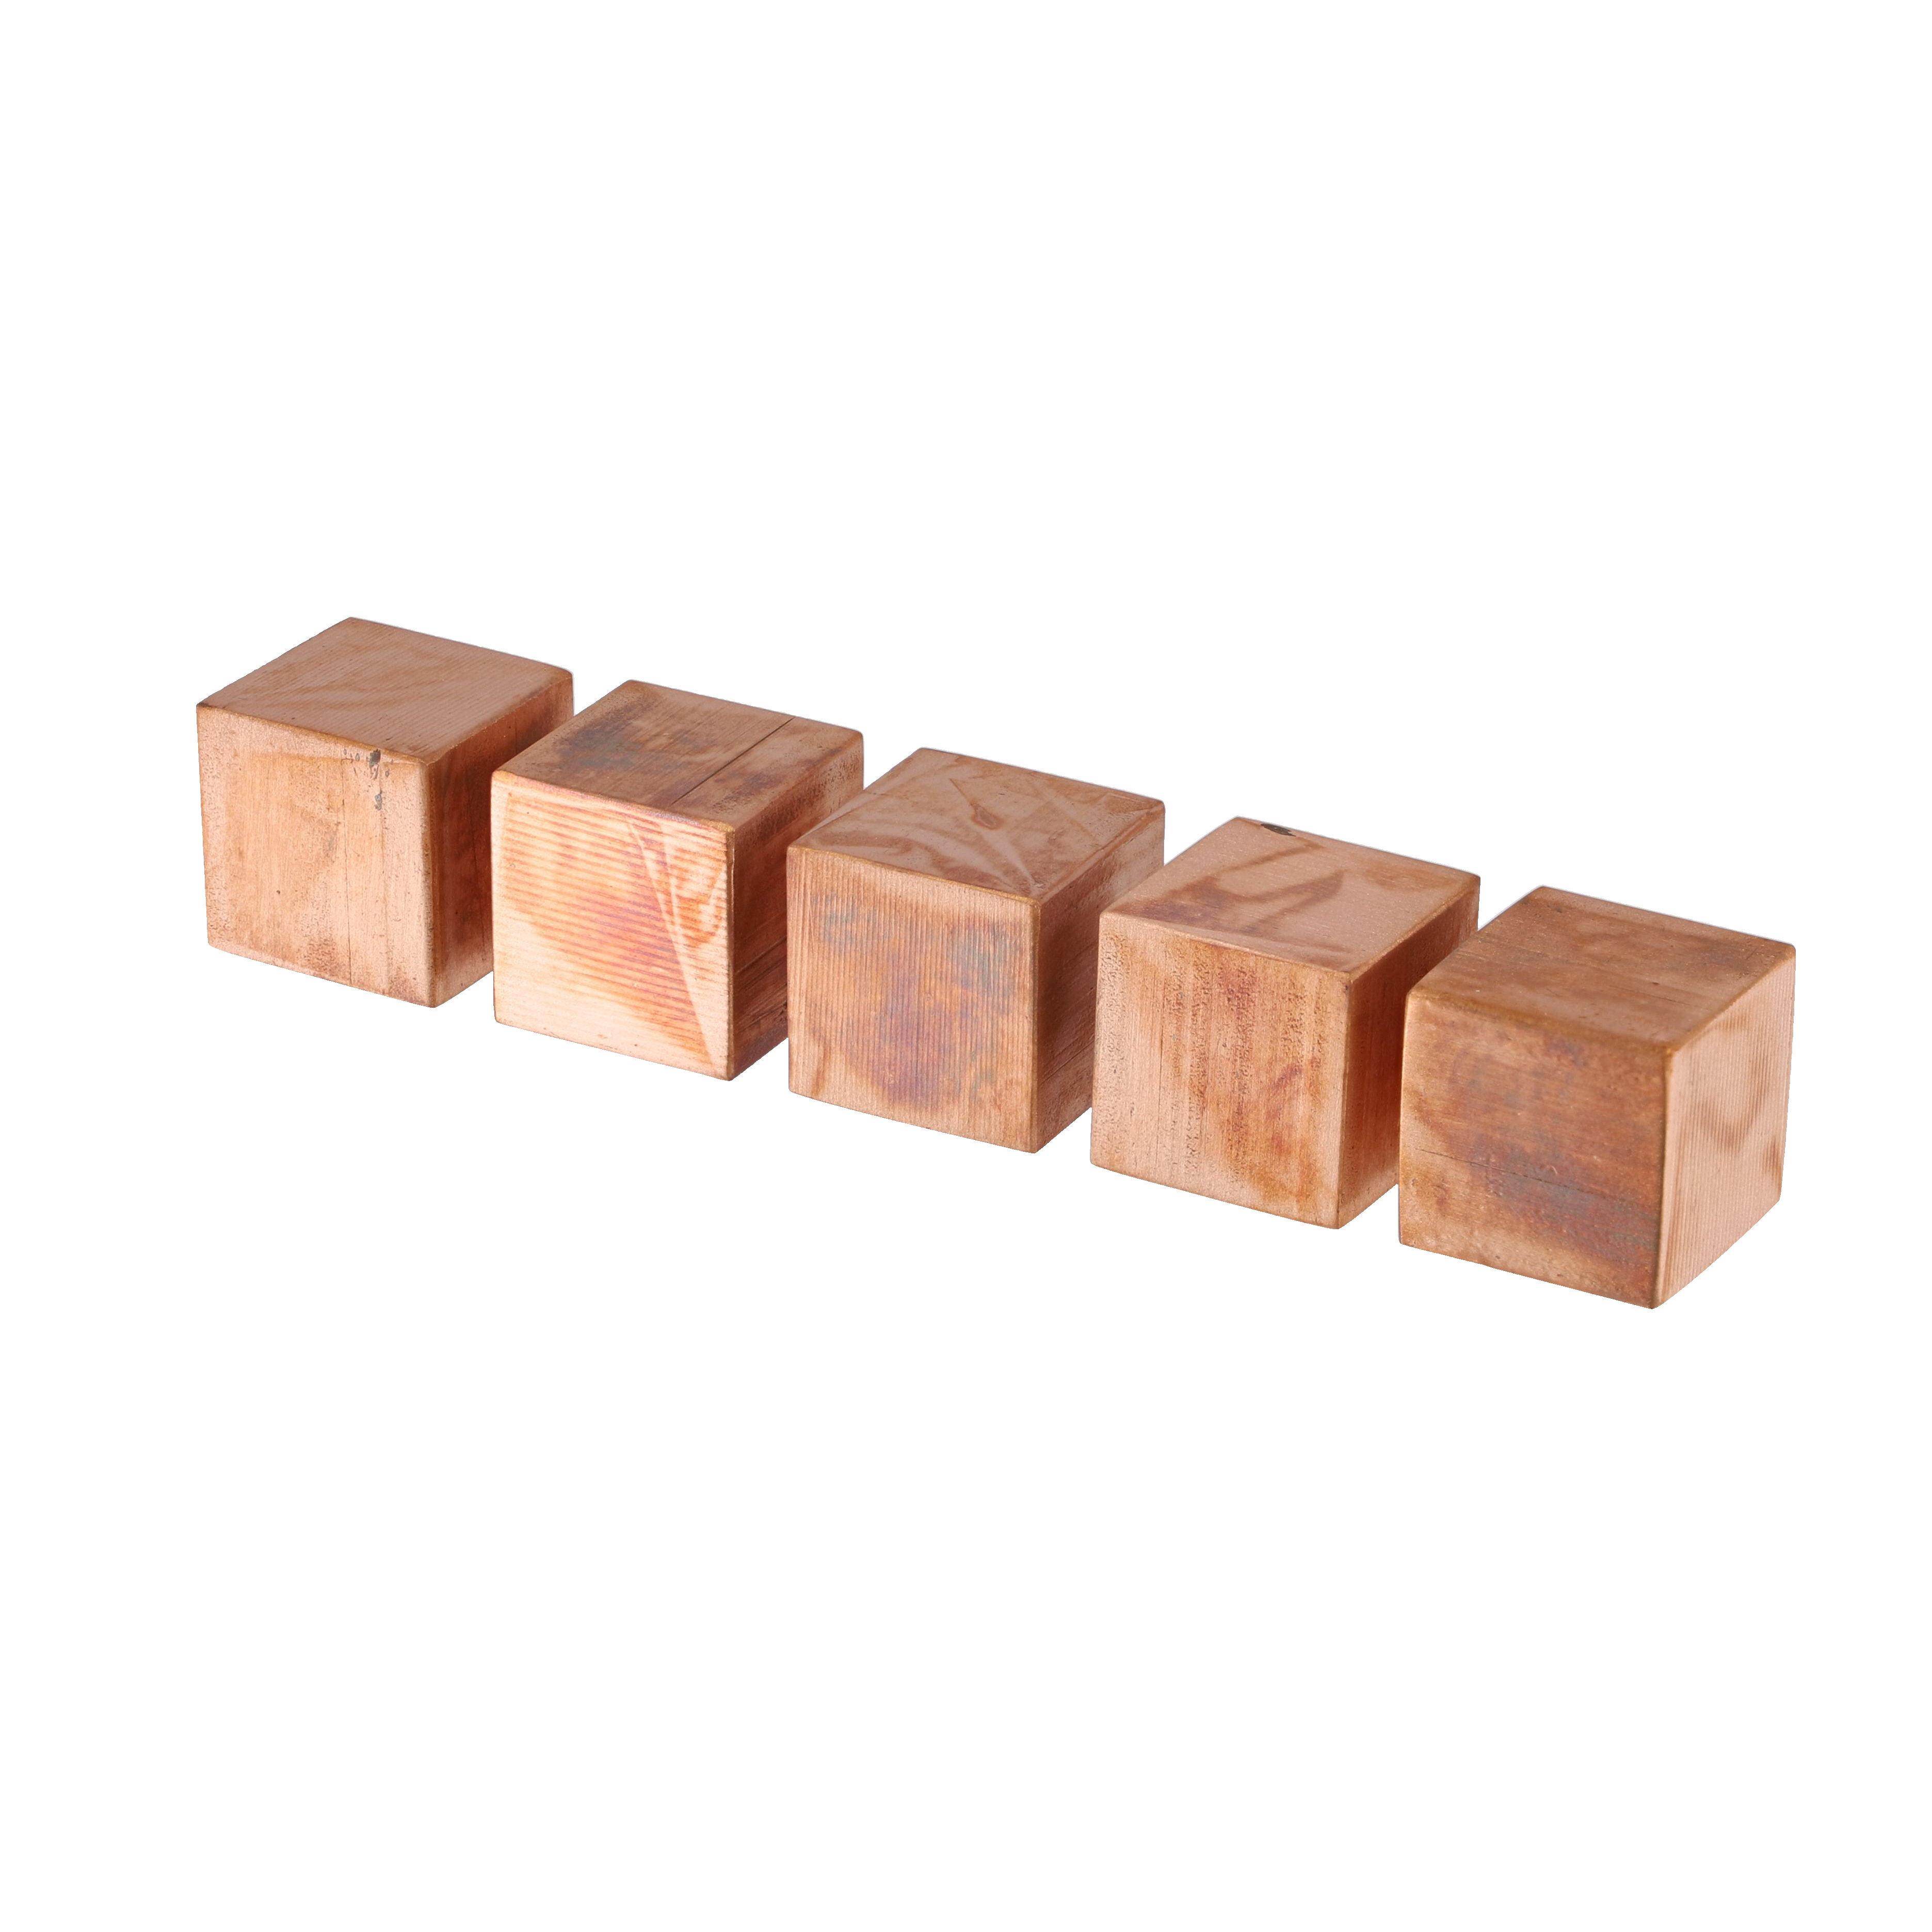 Cubes For Density Invest. Copper